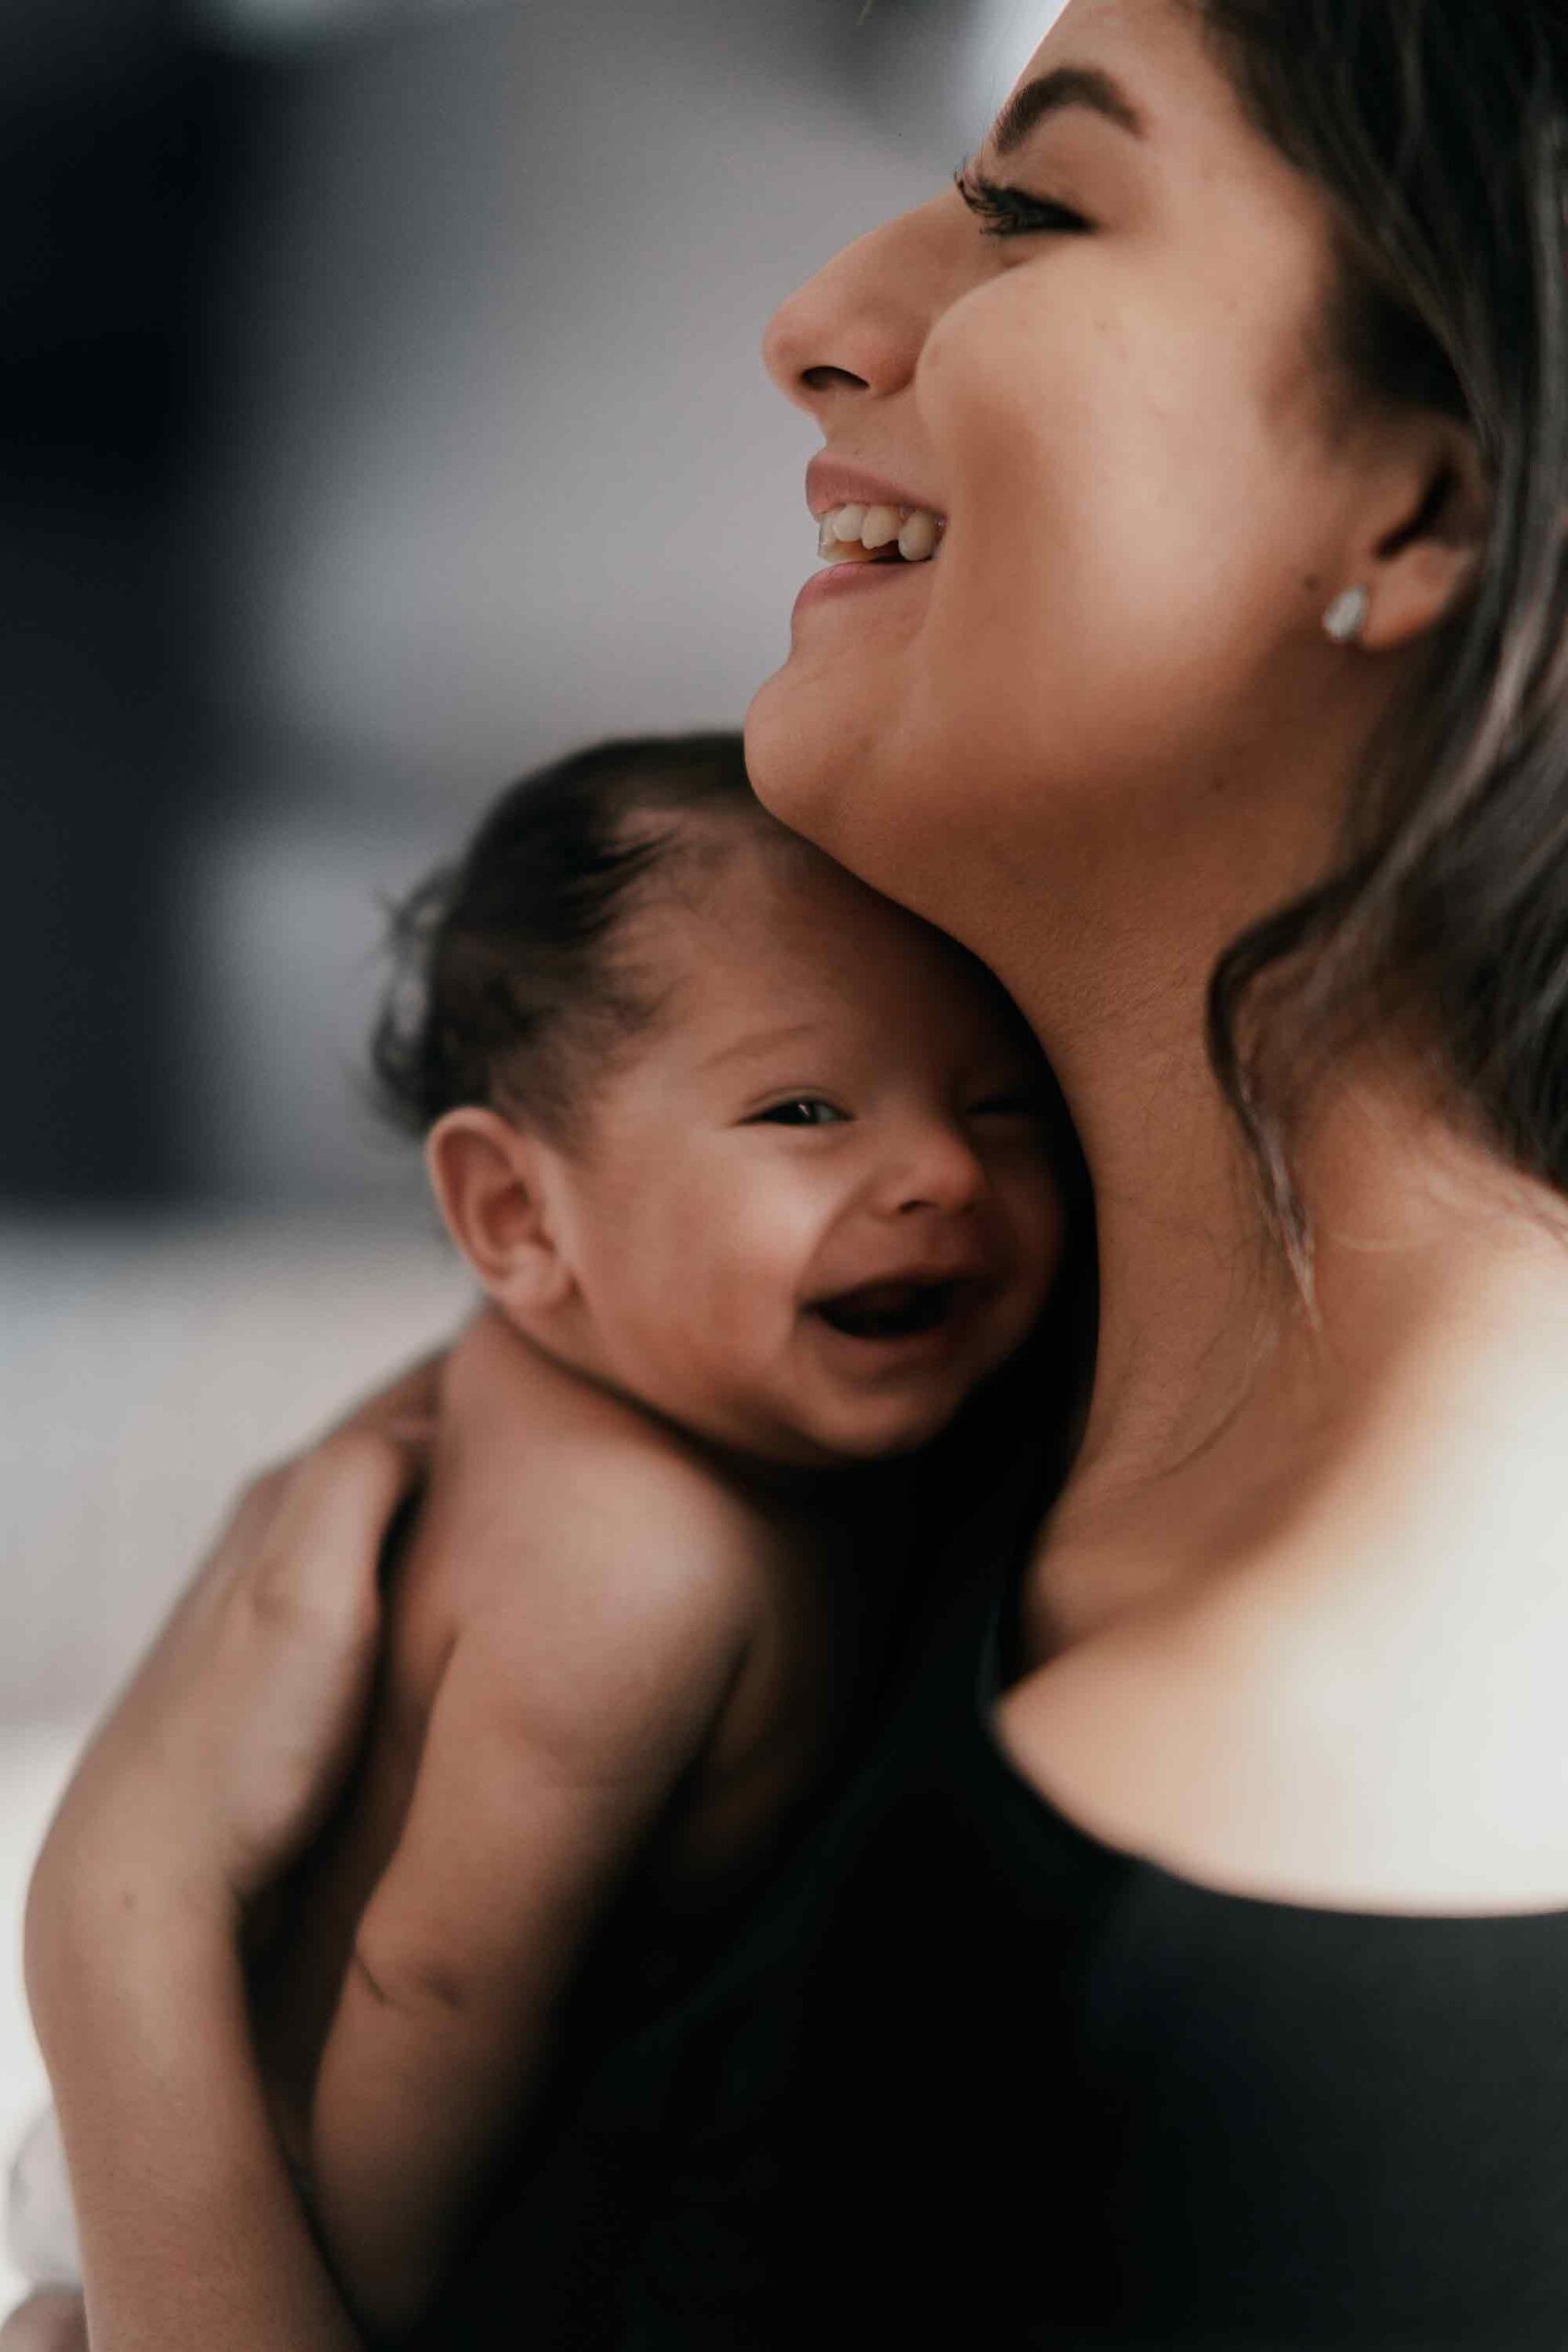 breastfeeding memes; Image by Raul Angel on Unsplash